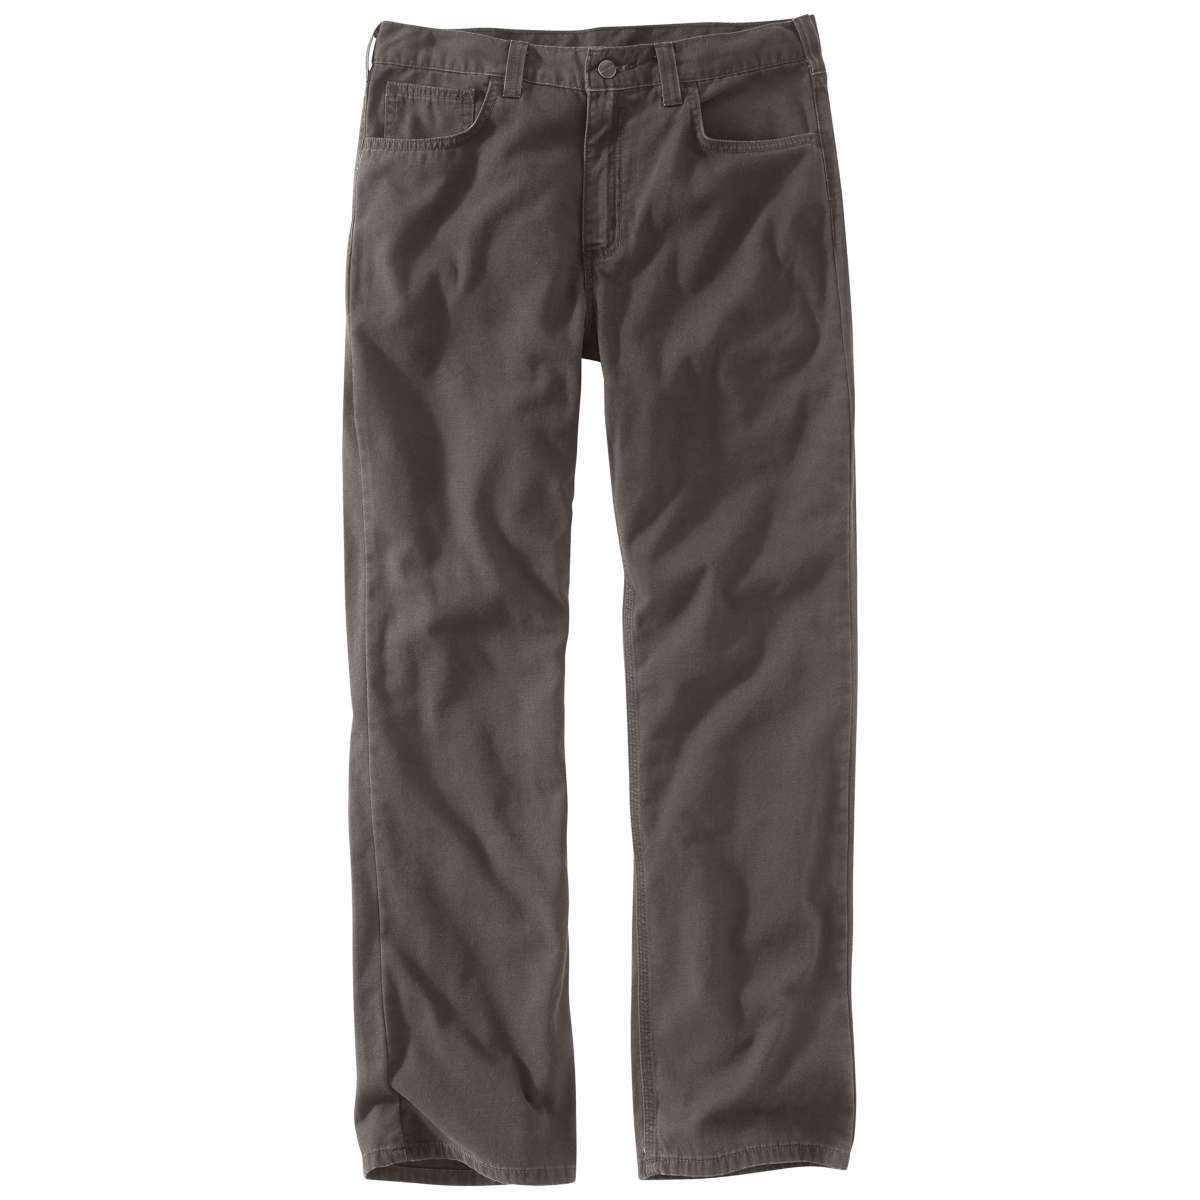 Carhartt Men's Rugged Flex Rigby 5-Pocket Work Pants - Black, 32/32